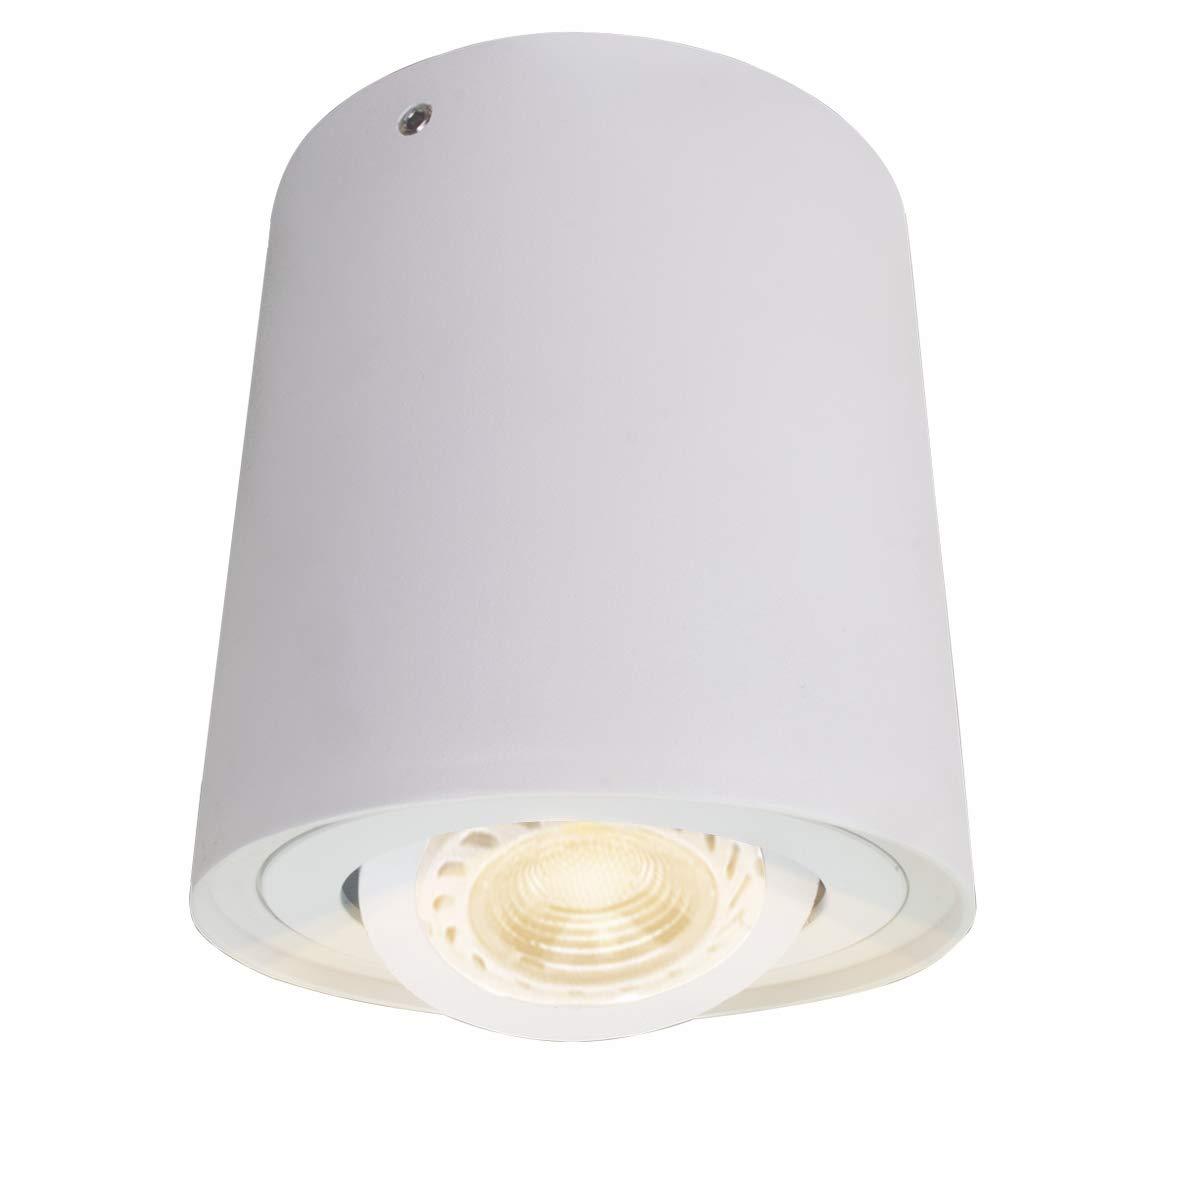 Budbuddy LED ceiling light rotatable Ceiling Spots spotlight for kitchen living room bedroom ceiling lamp Adjustable spot(includes 5W LED GU10 bulb) 220V 0